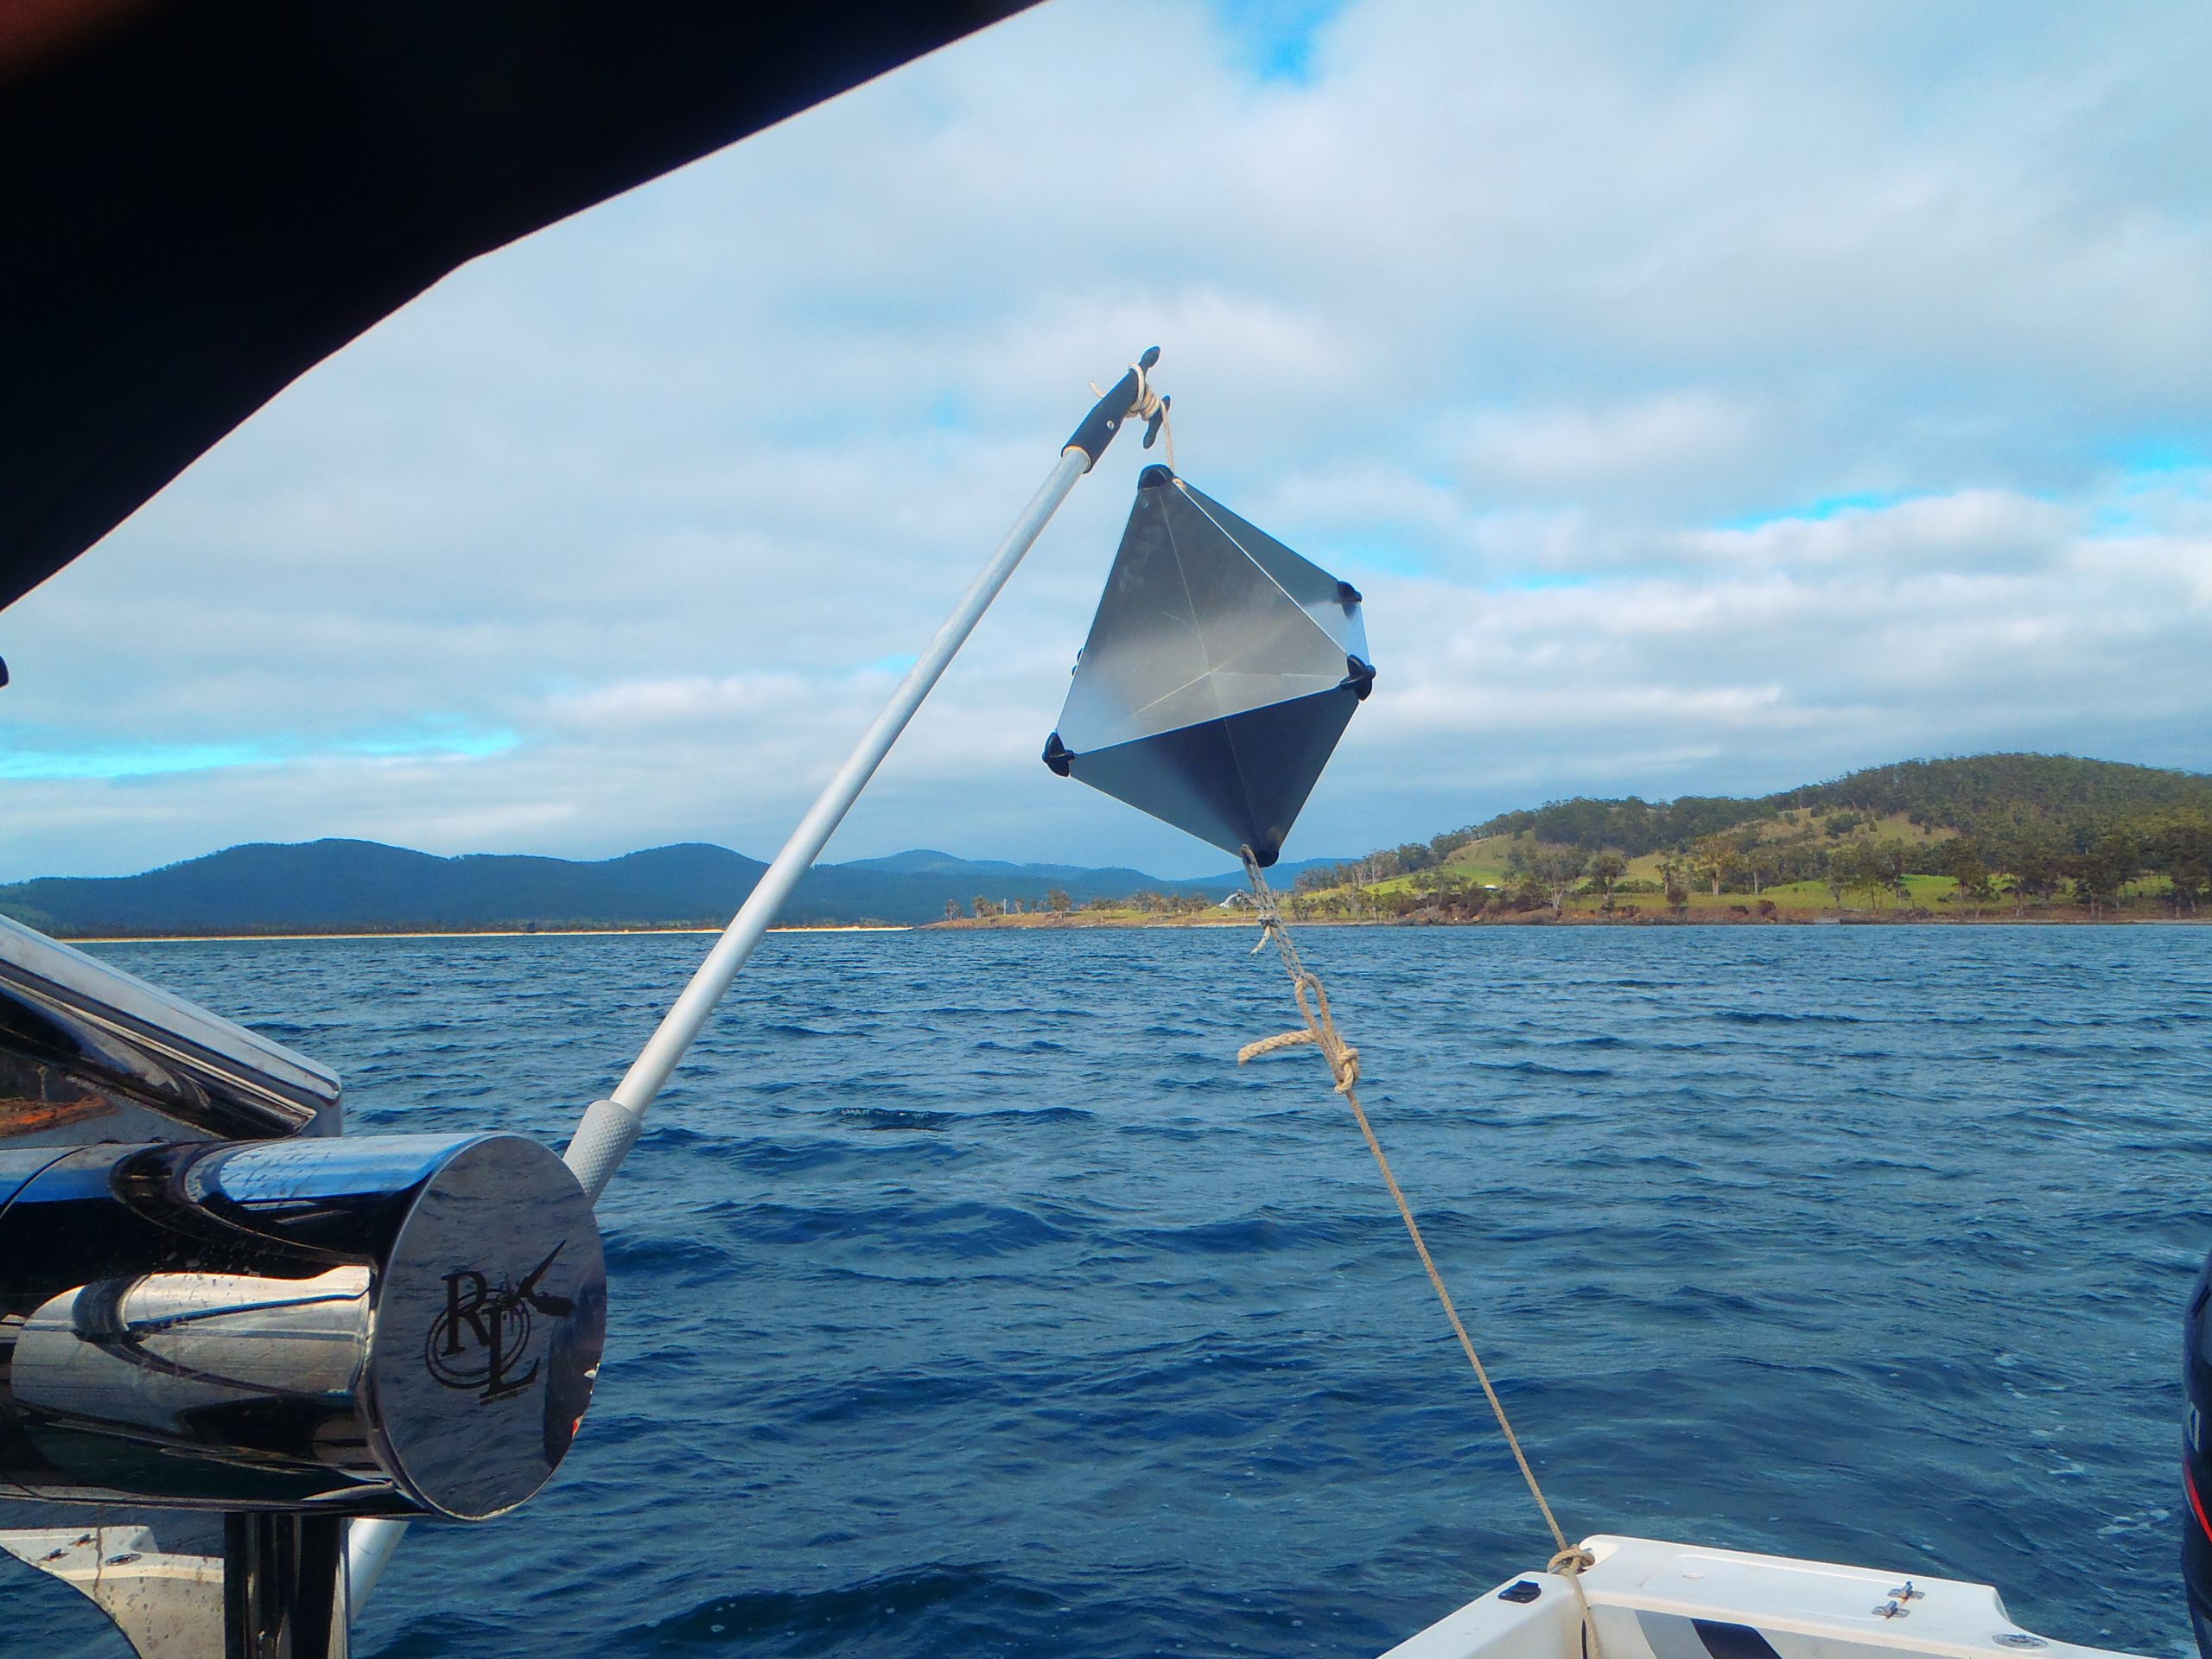 sailboat radar reflector